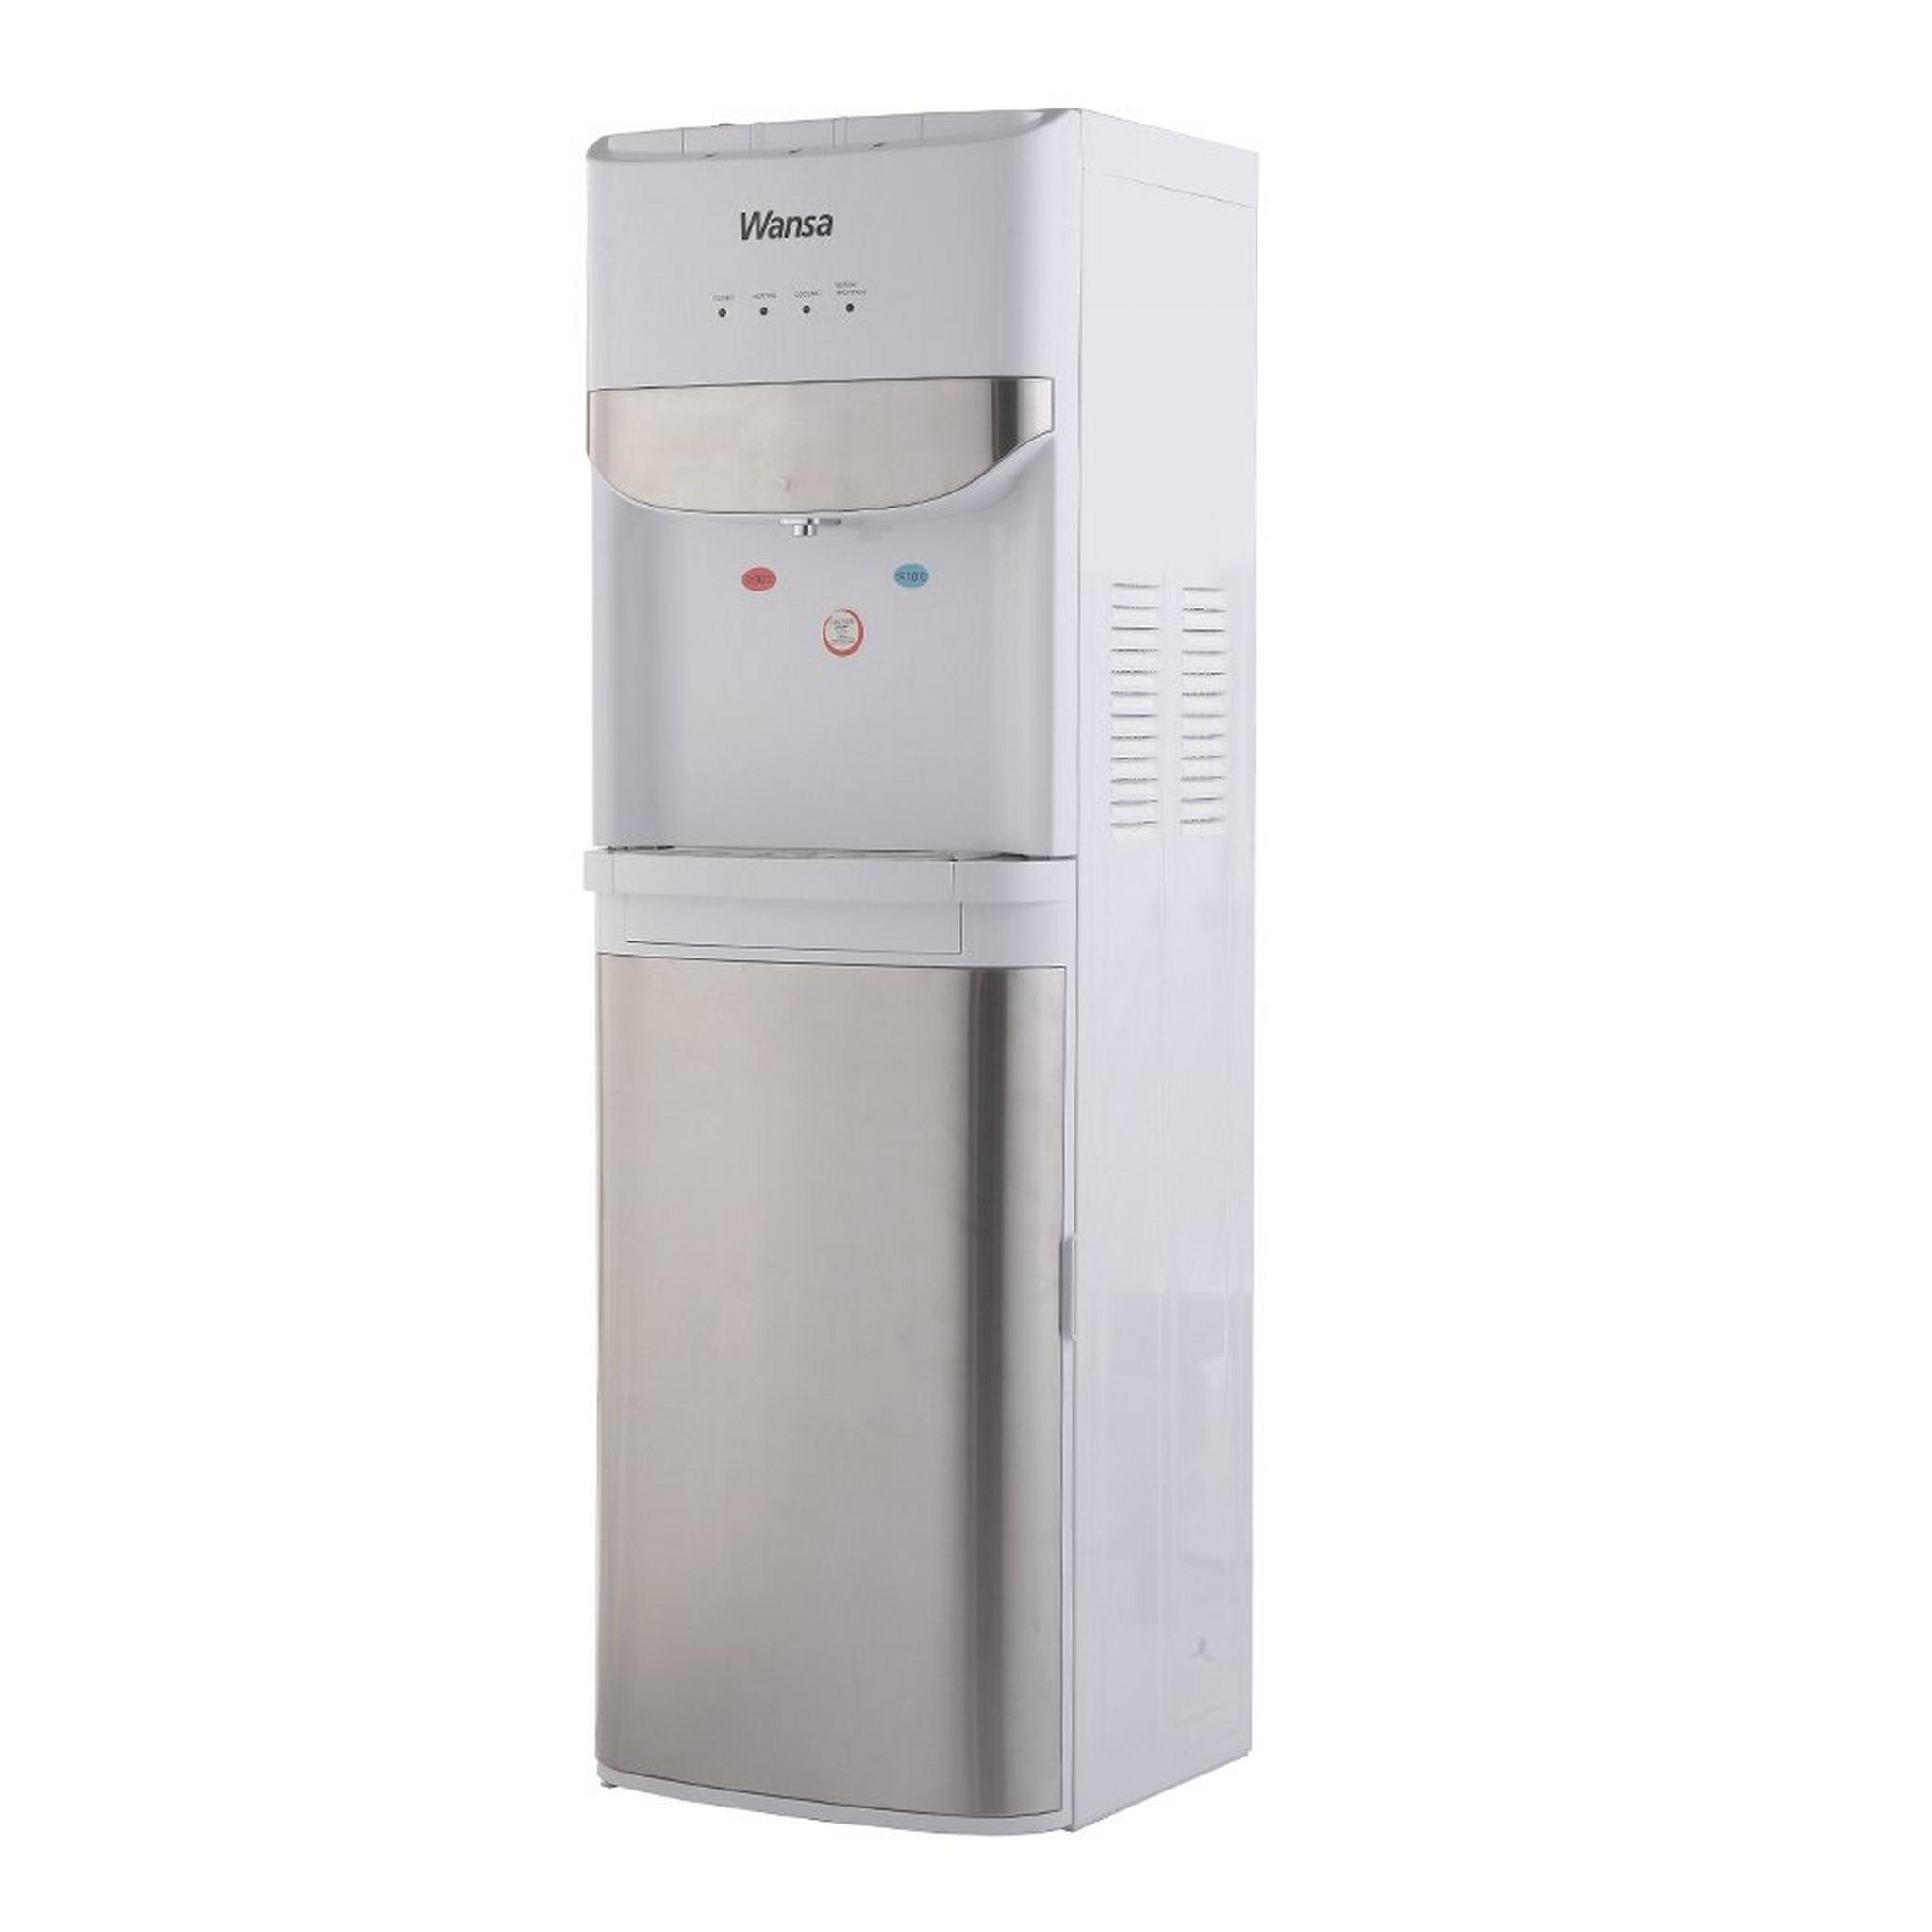 Wansa Water Dispenser (WWD1FSSWTC1) - White